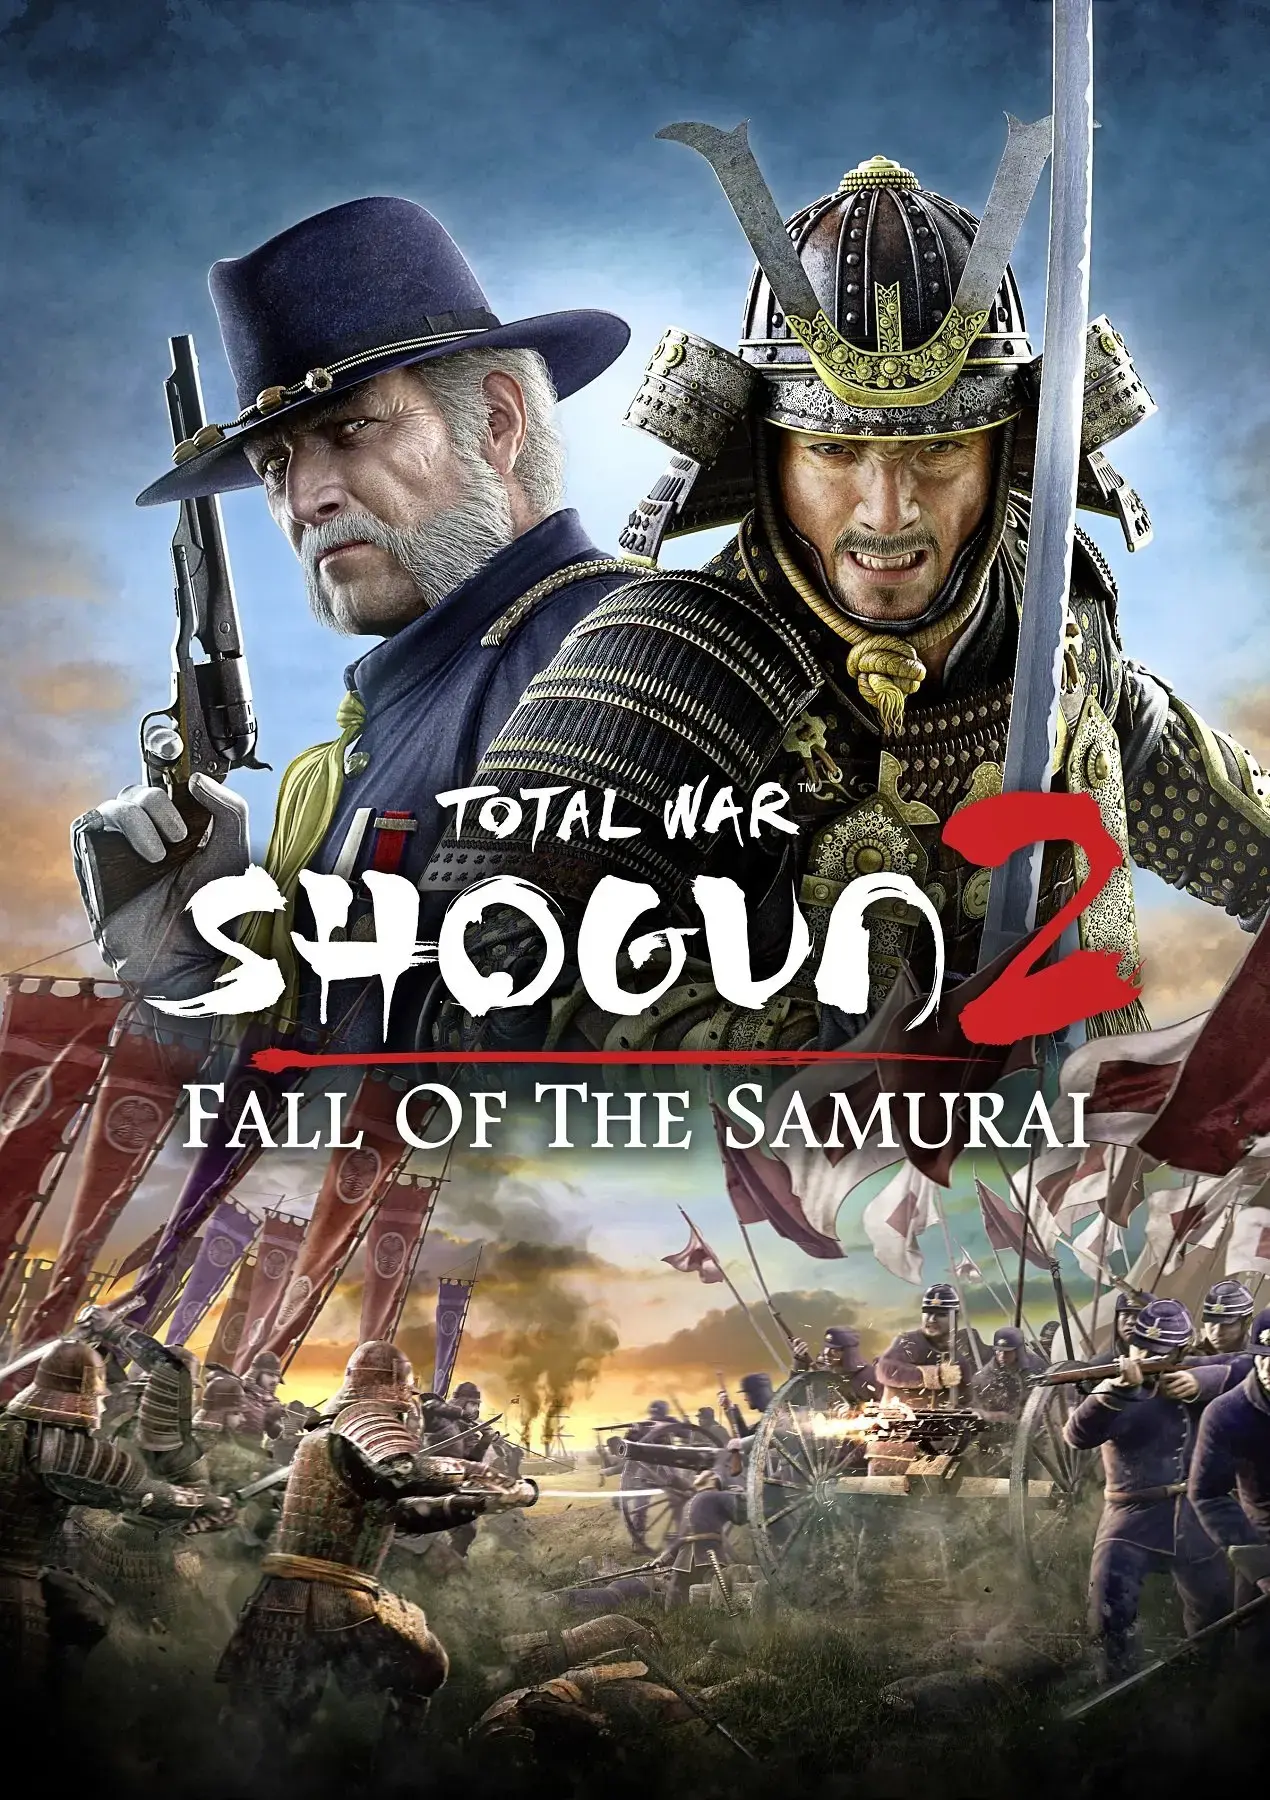 Total War Shogun 2: Fall of the Samurai (PC / Mac) - Steam - Digital Code